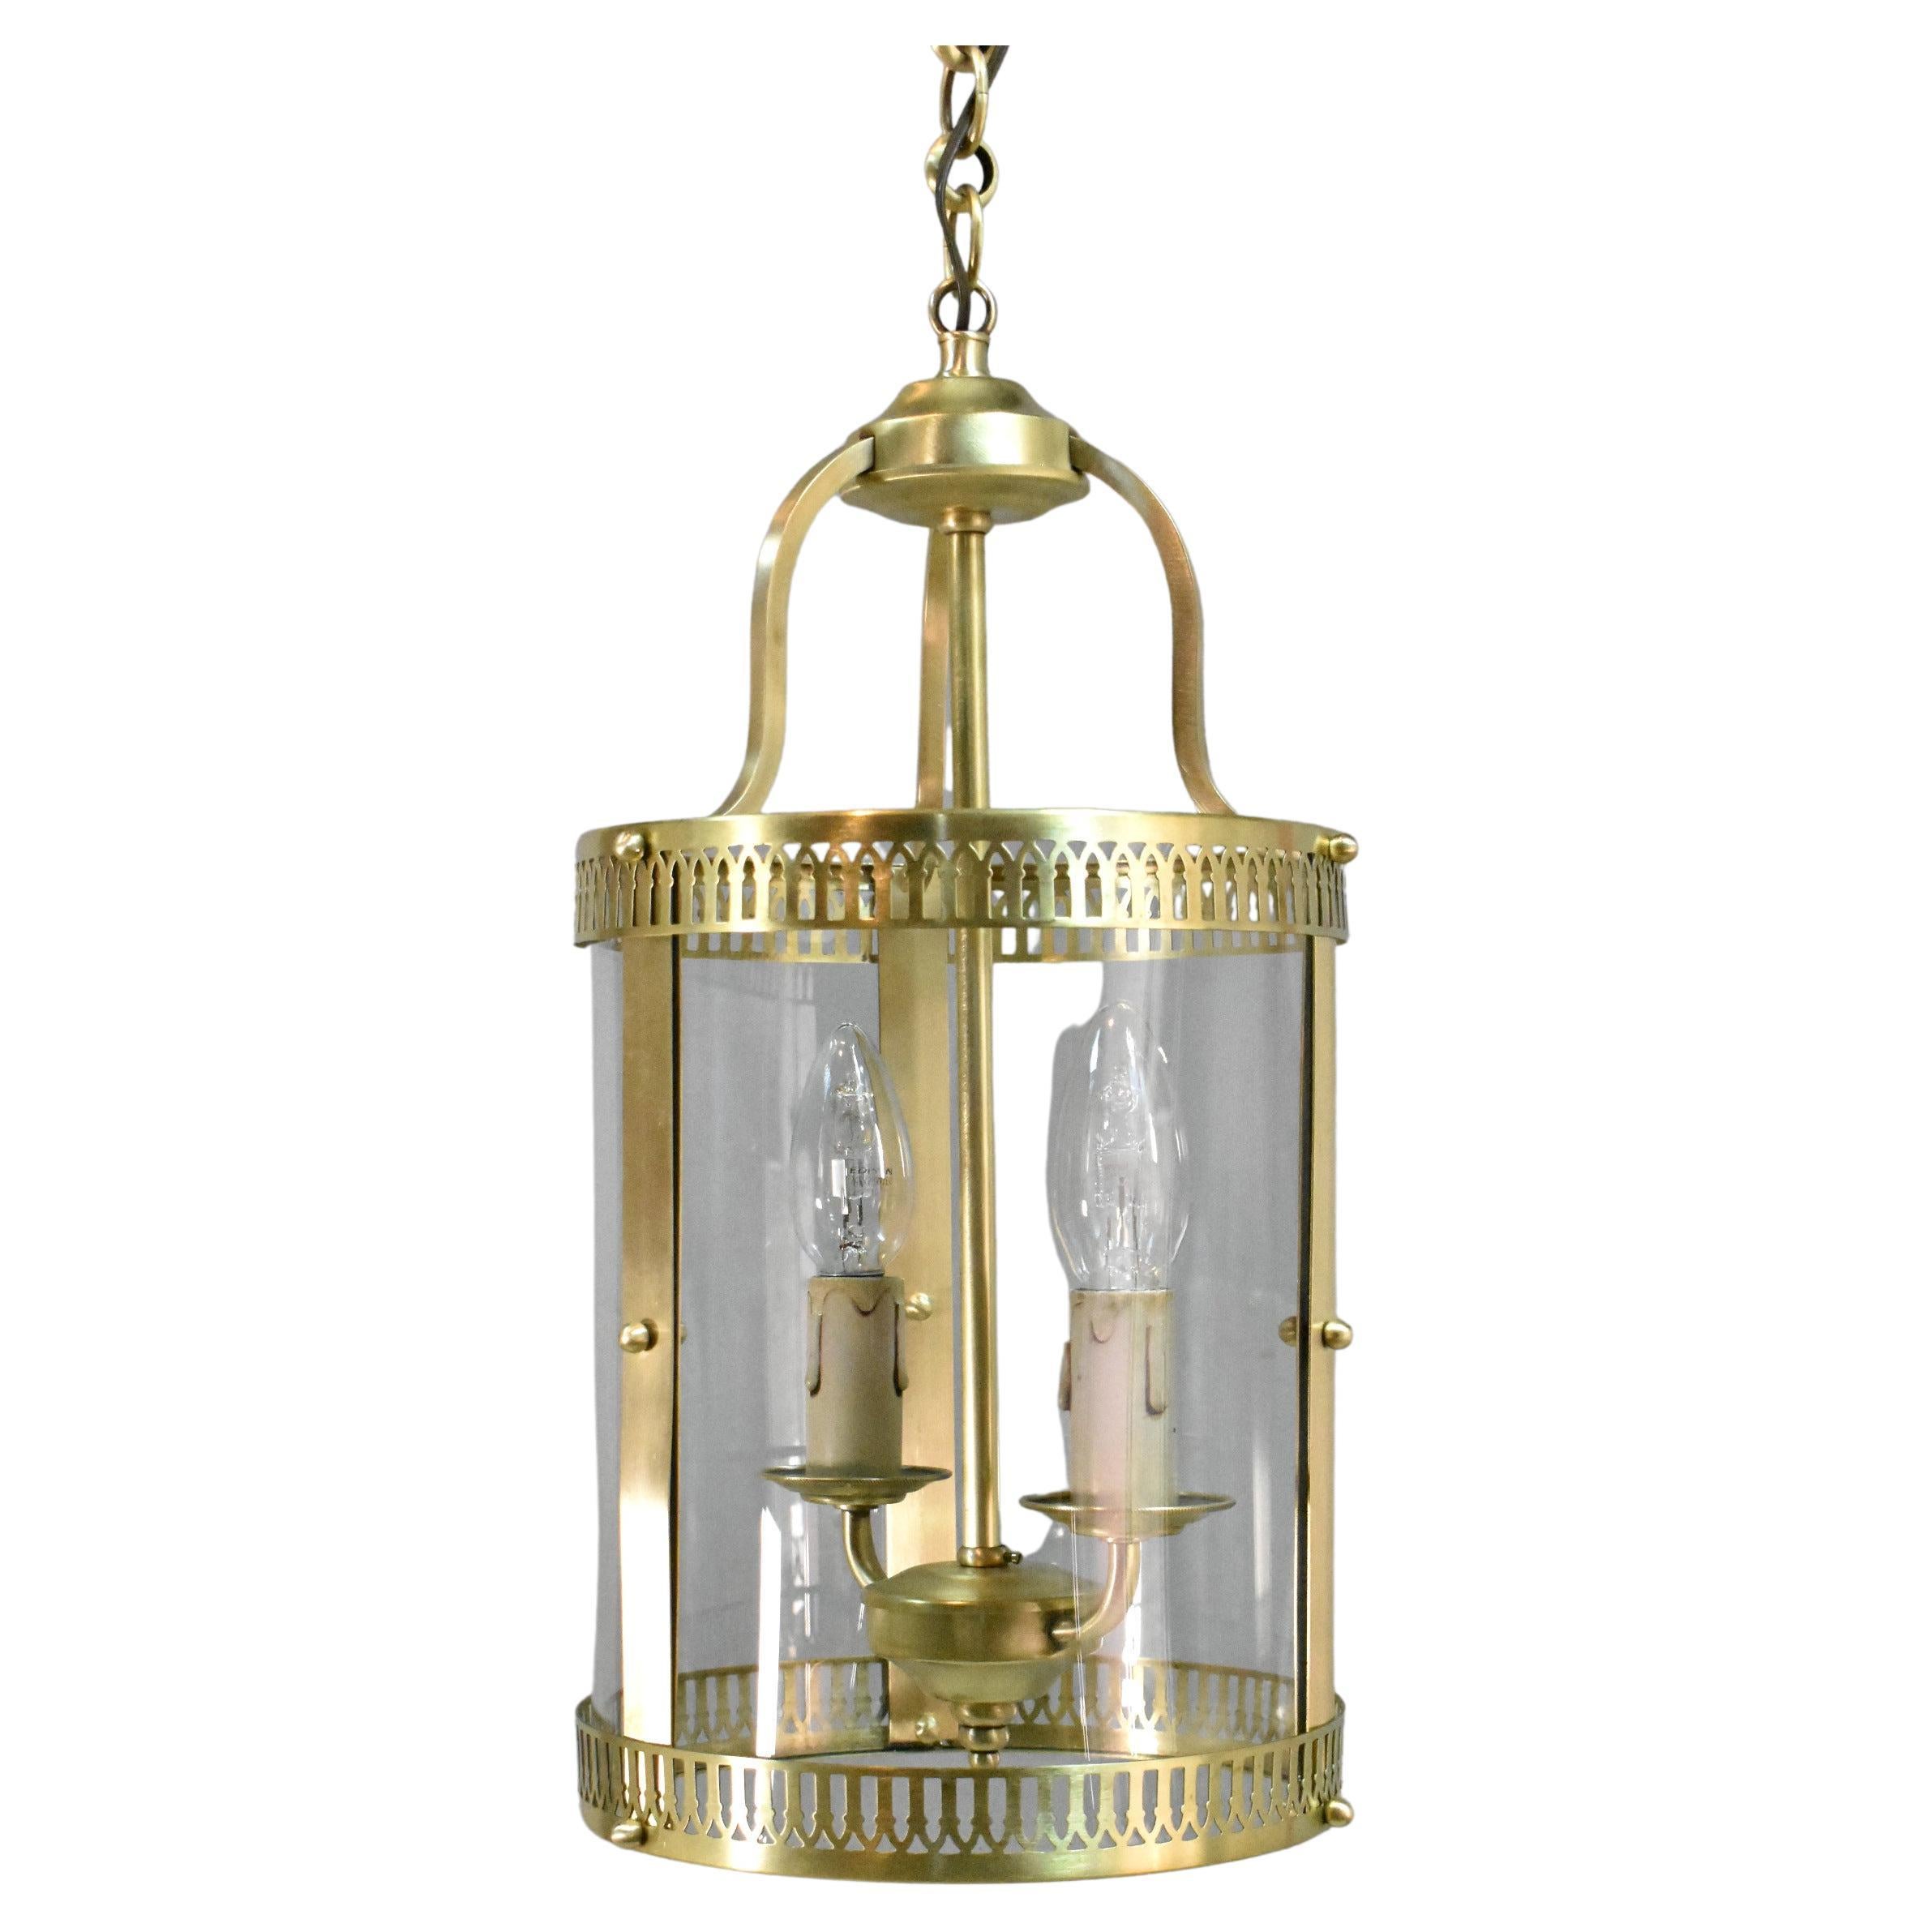 French Antique Hall Lantern in Brass